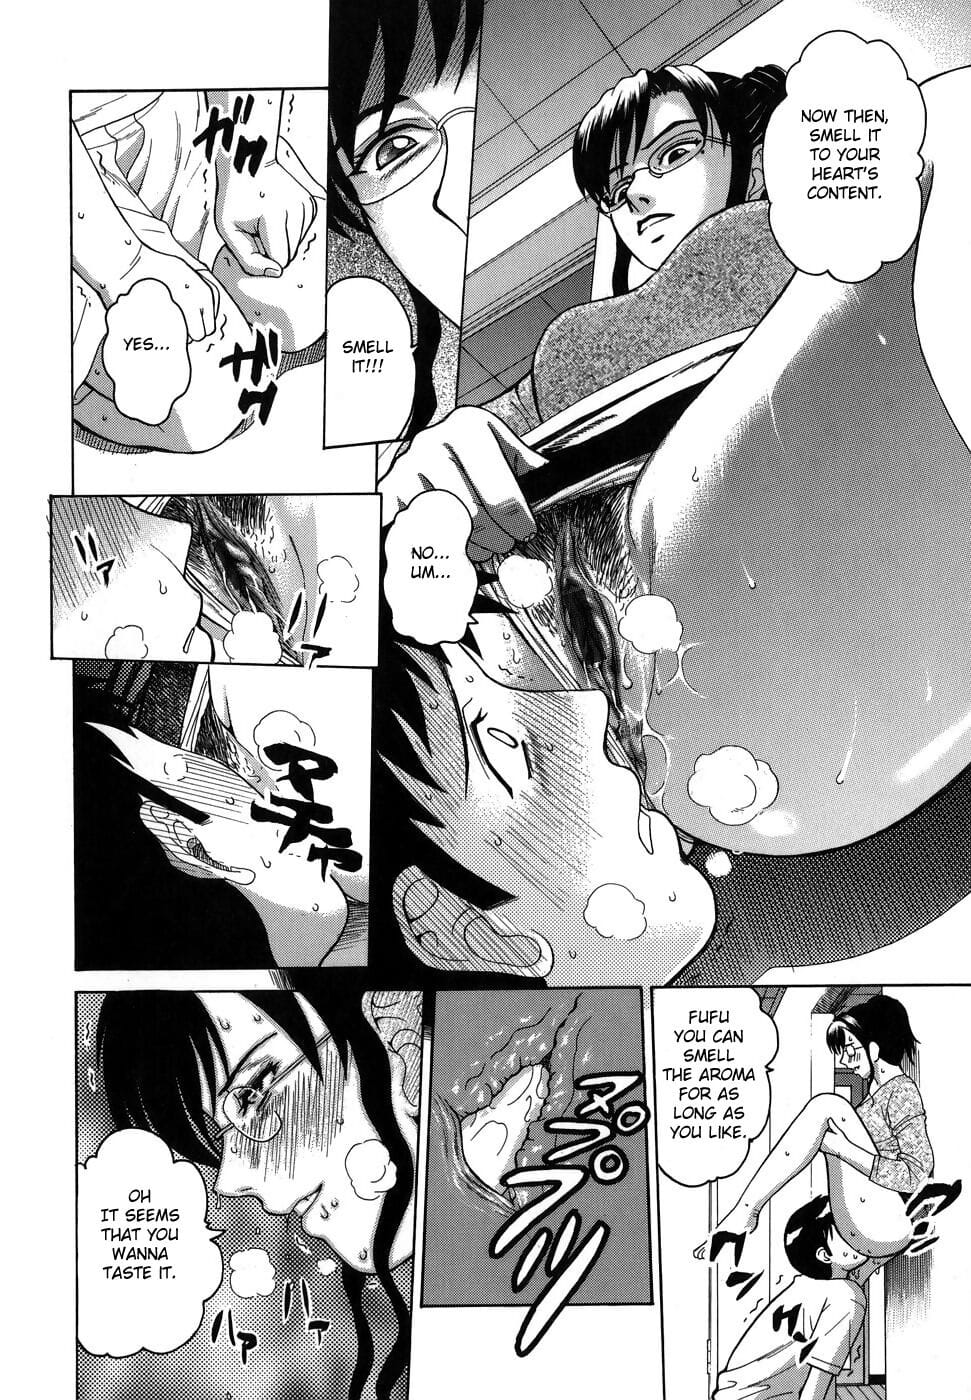 shitsuraku رائحة فقدت رائحة page 1